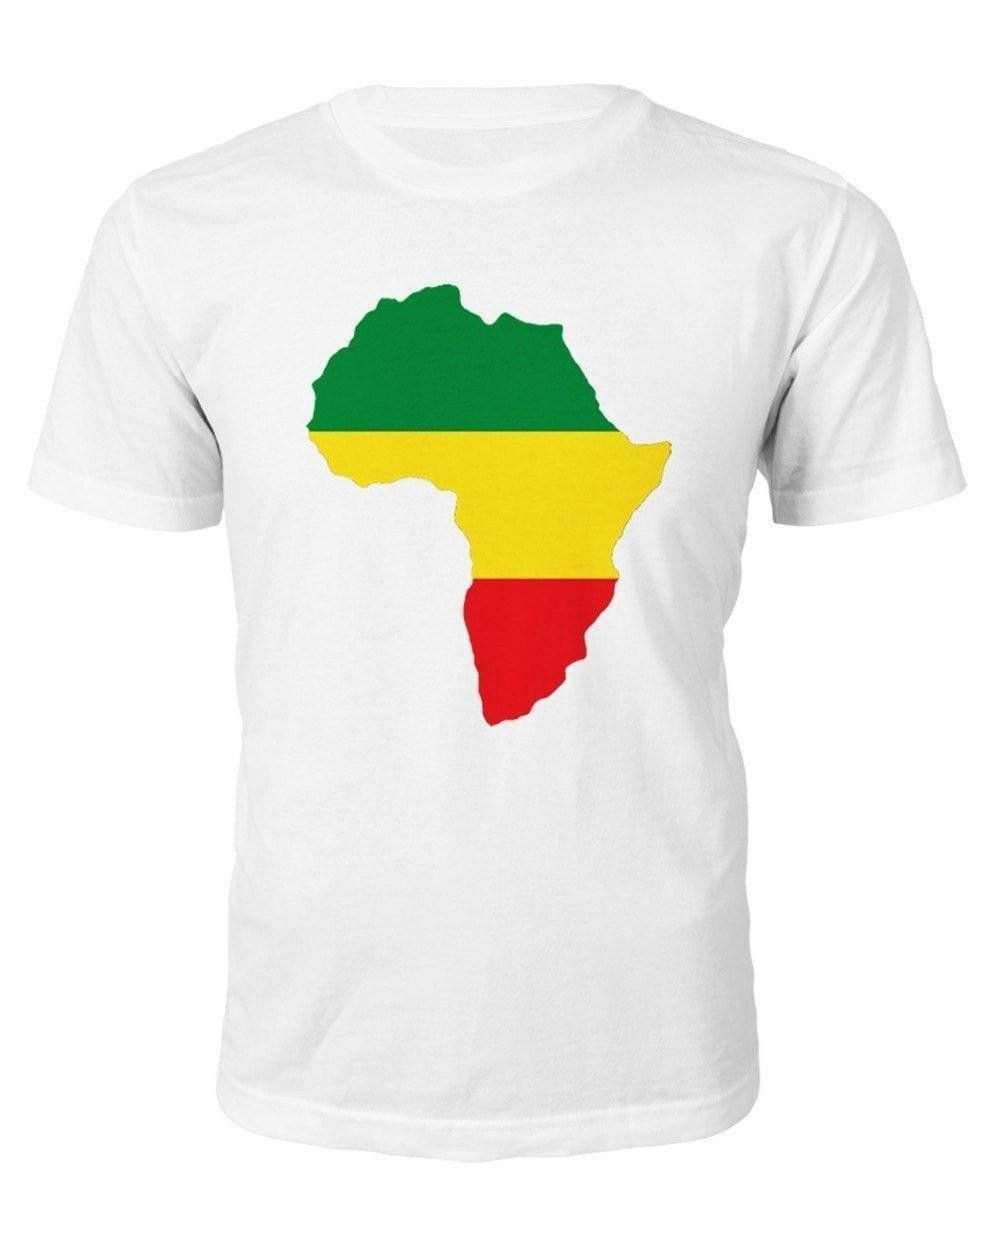 Africa T-shirt - Black Legacy